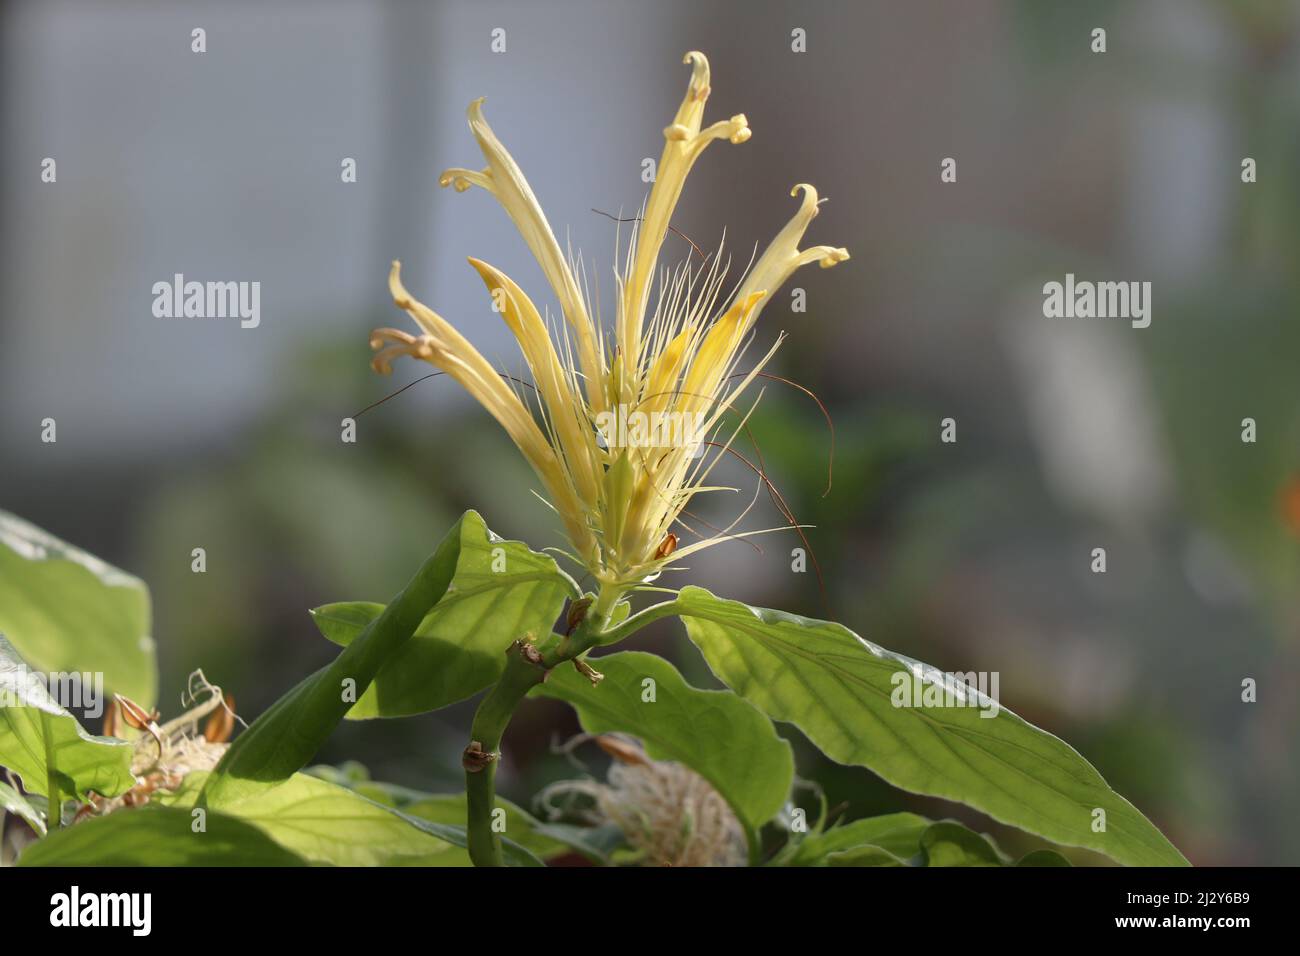 Flower schaueria flavicoma golden plume. Image Golden plume or Schaueria flavicoma Stock Photo